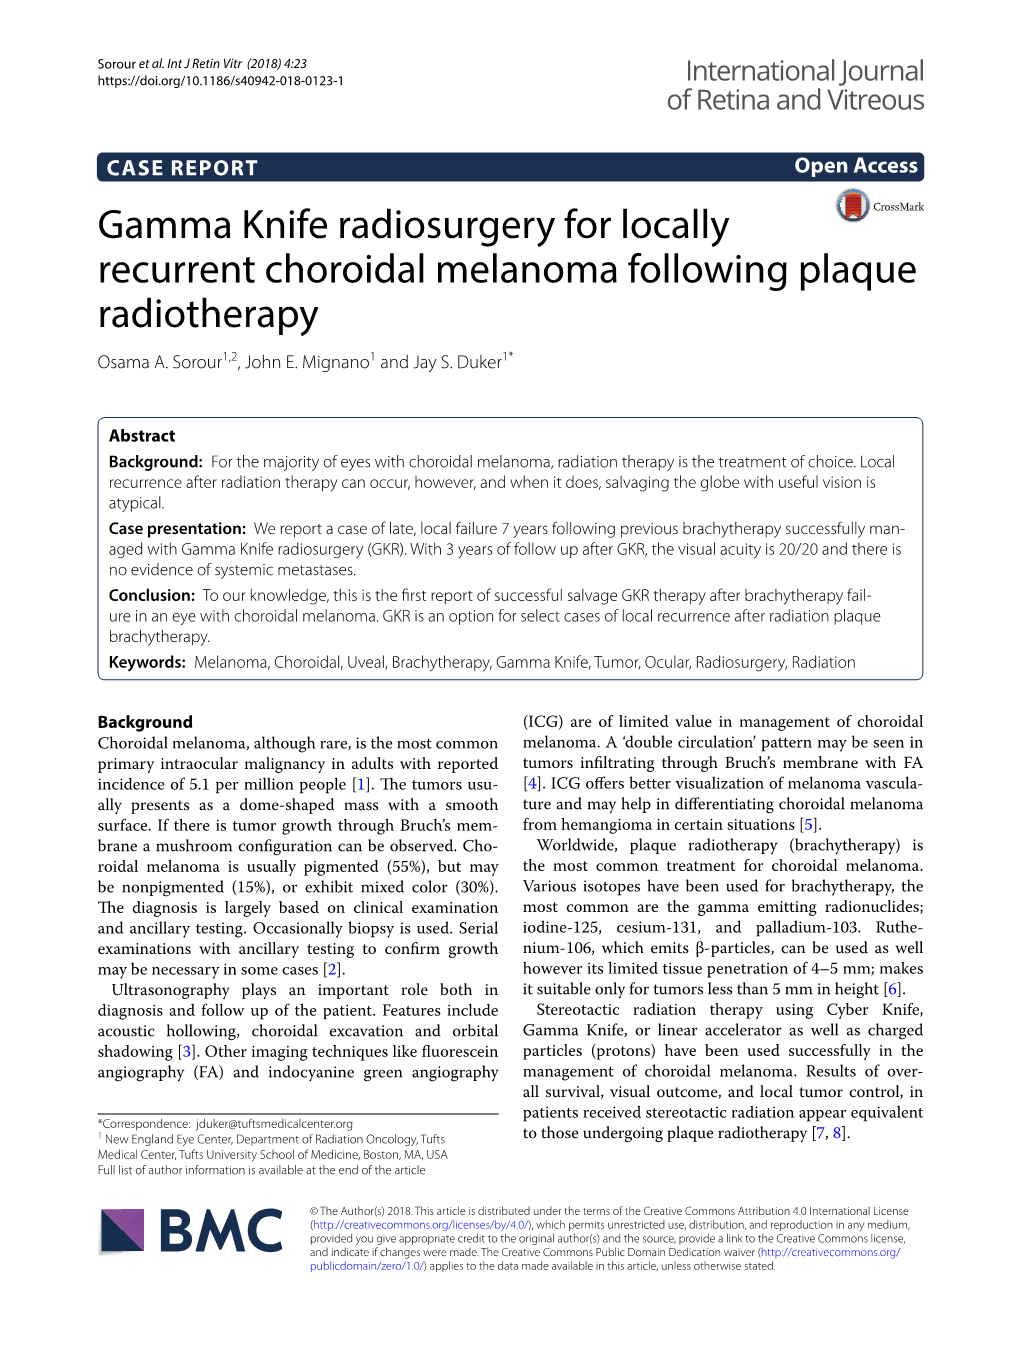 Gamma Knife Radiosurgery for Locally Recurrent Choroidal Melanoma Following Plaque Radiotherapy Osama A